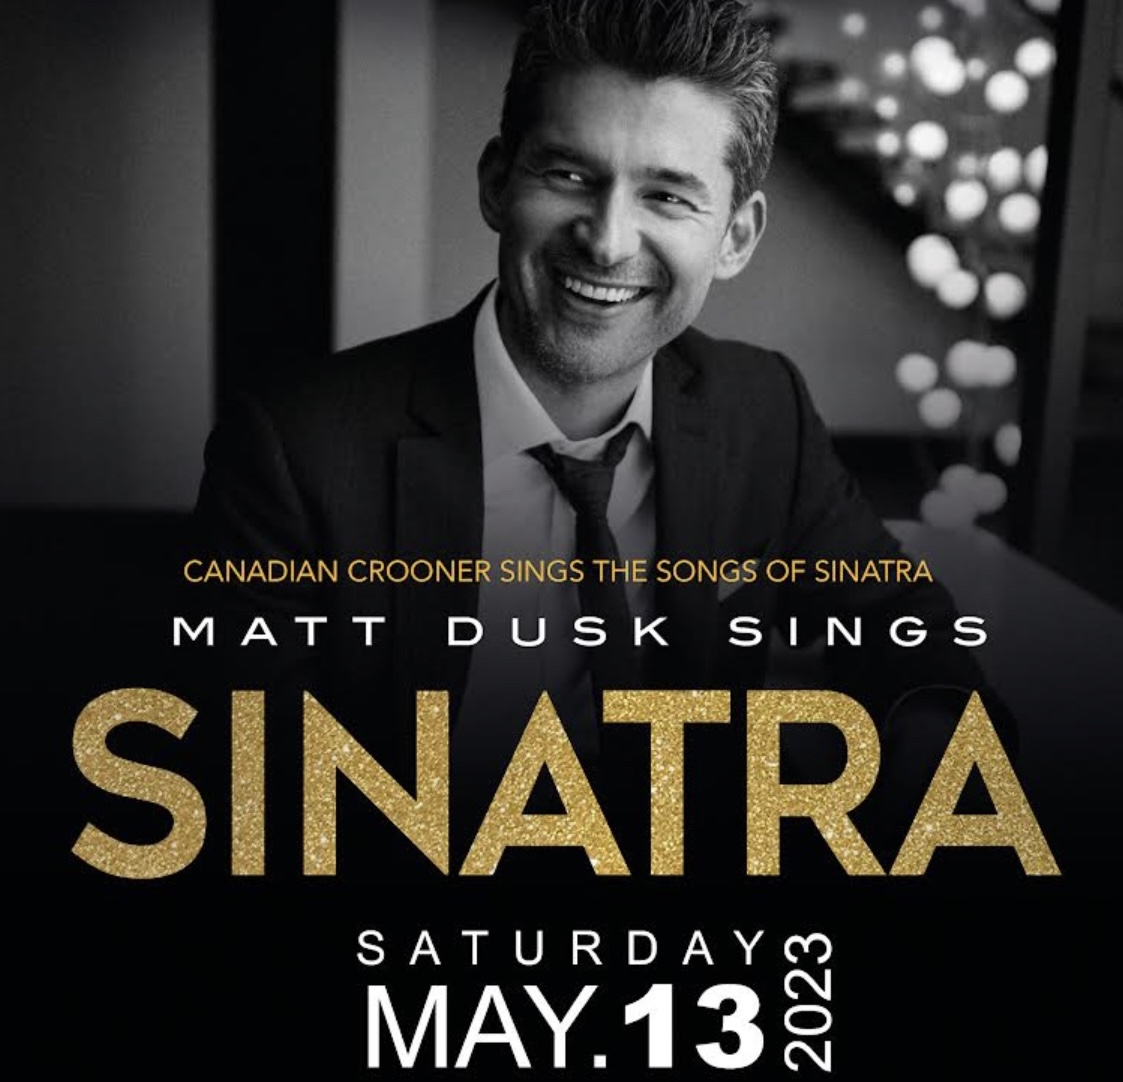 Matt Dusk Sings Sinatra at Capitol 33